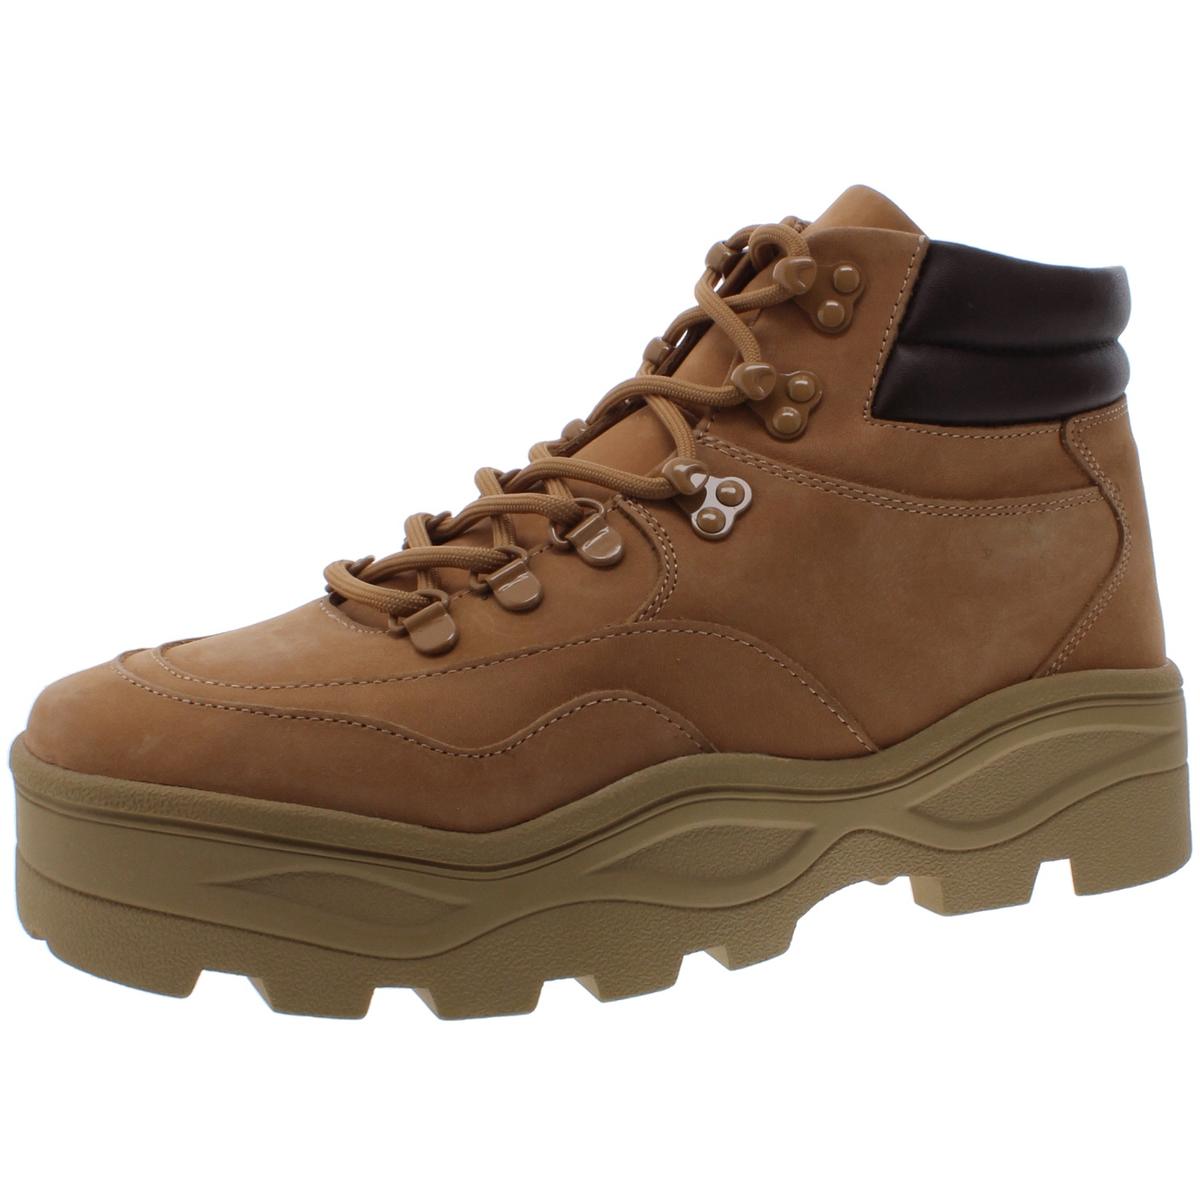 Steve Madden Womens Rockie Tan Hiking Boots Shoes 8.5 Medium (B,M) BHFO ...